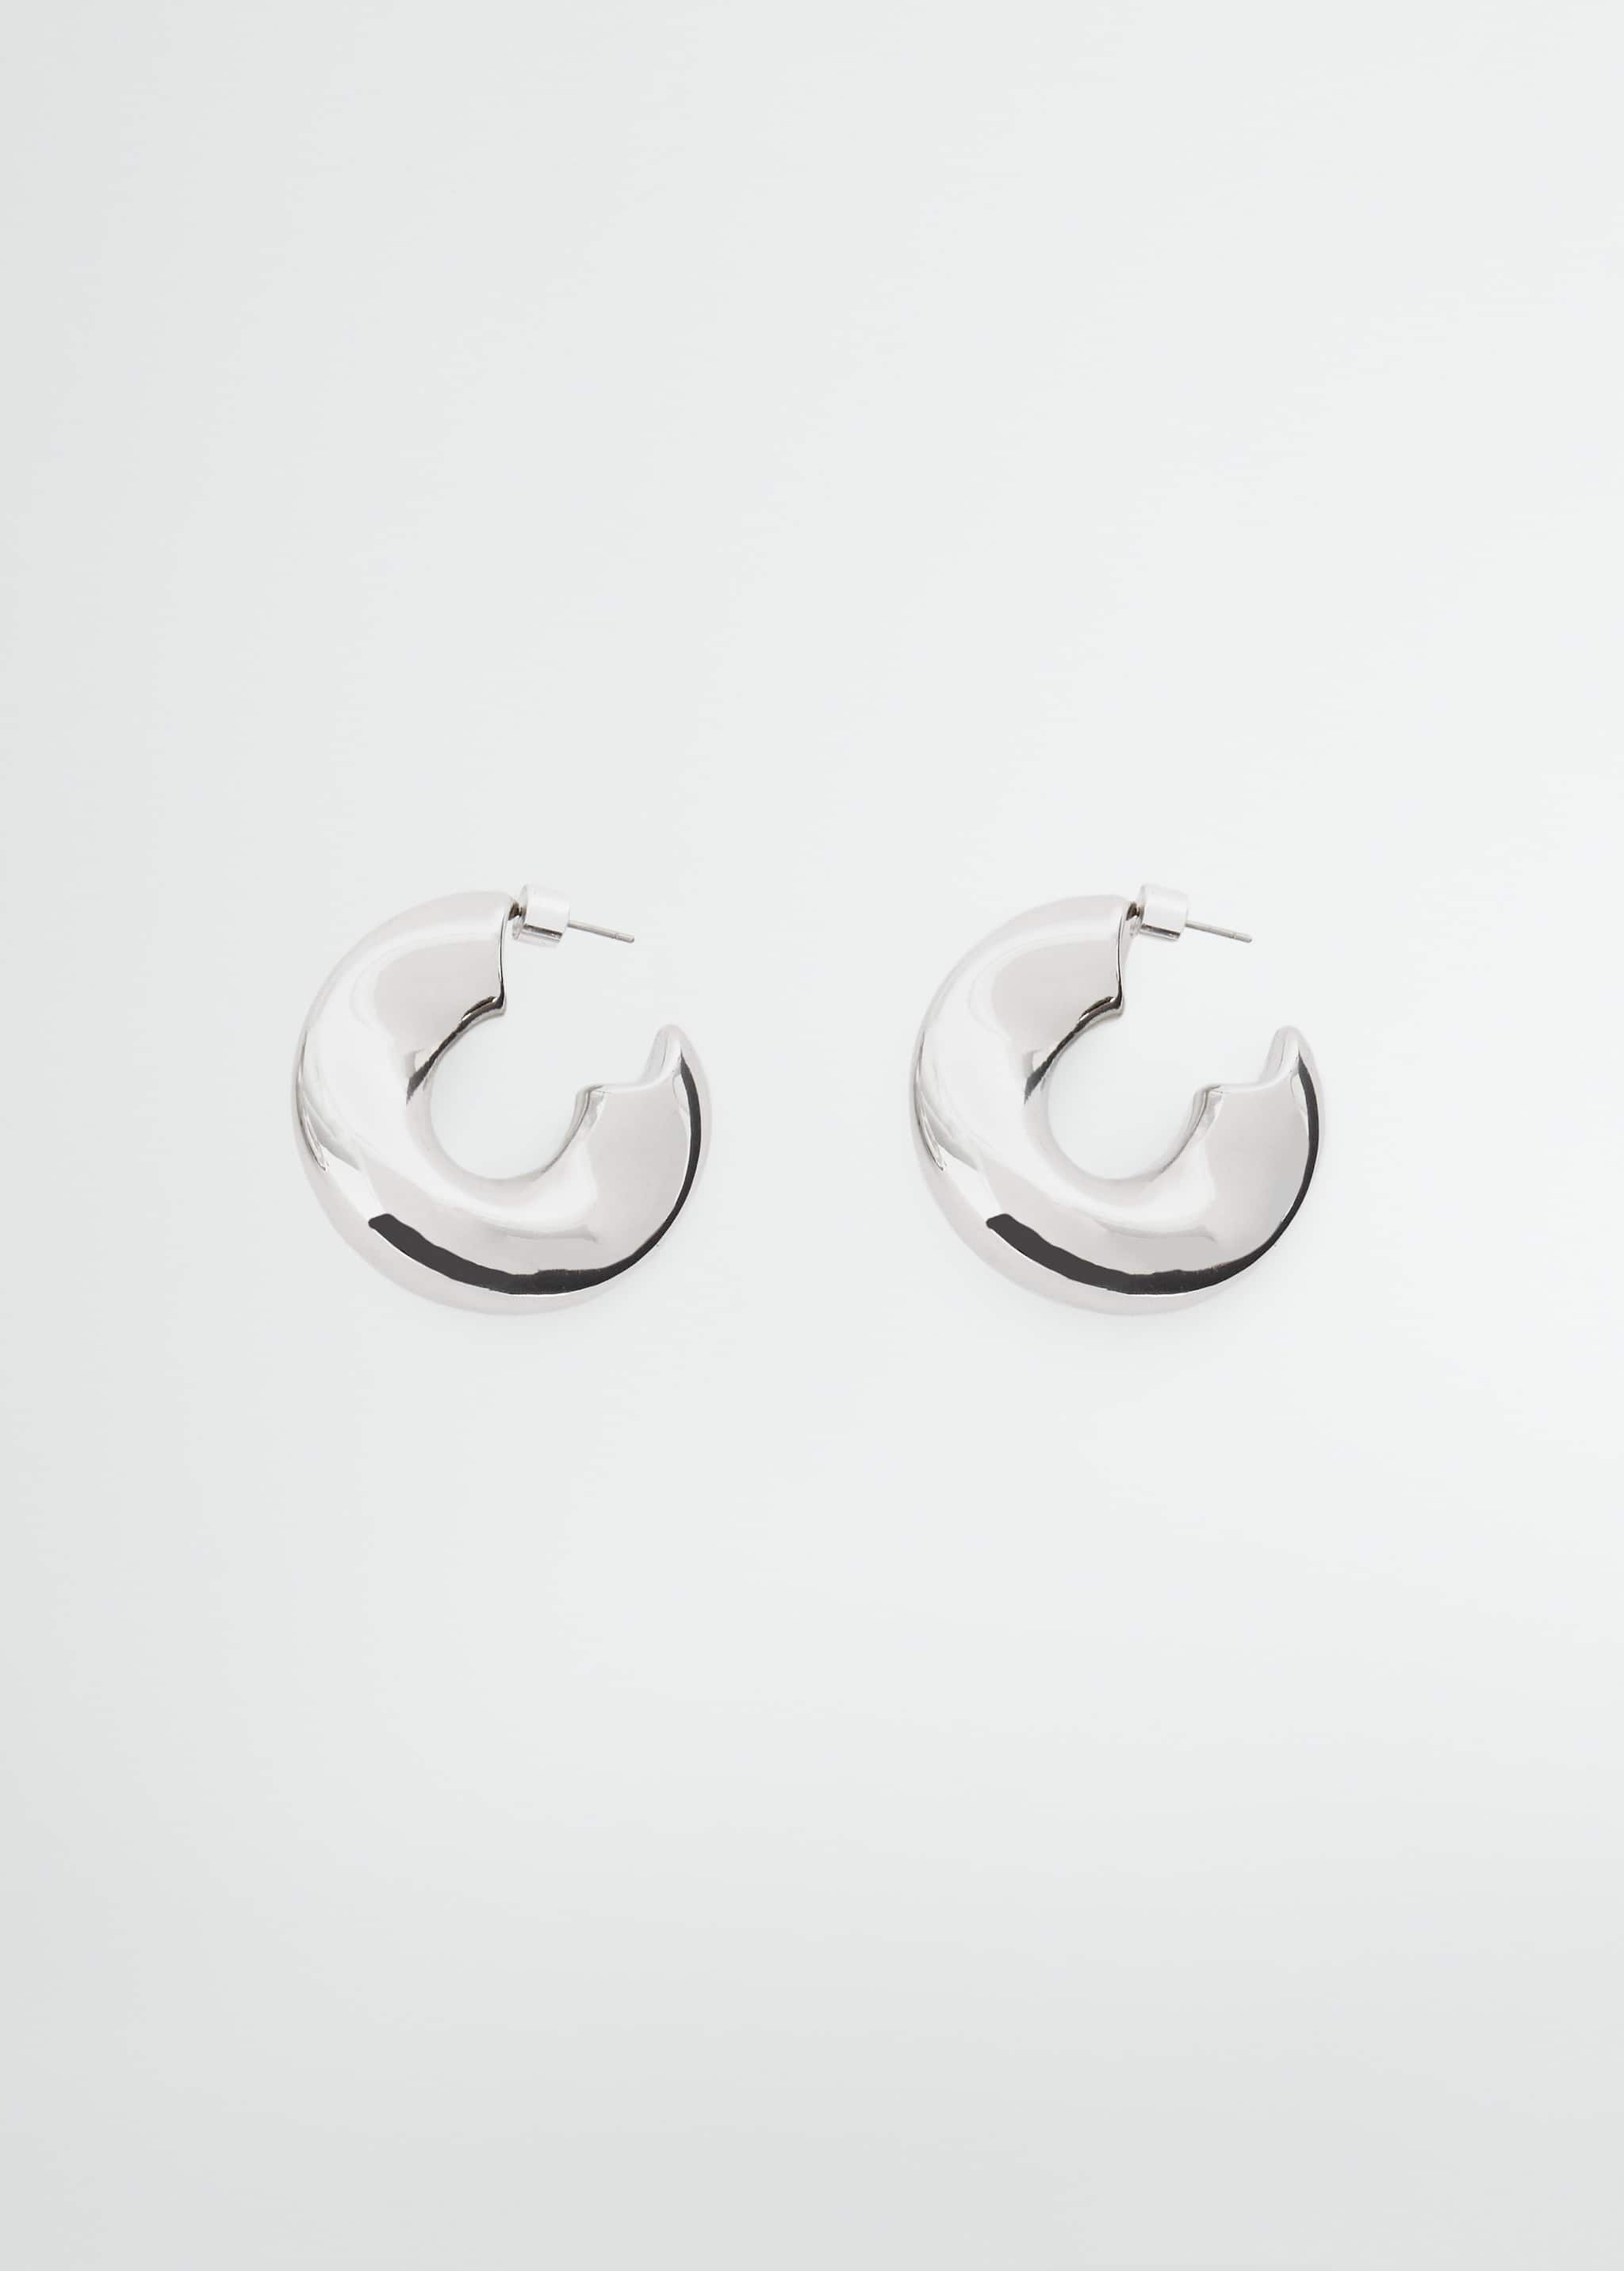 Metallic hoop earrings - Article without model